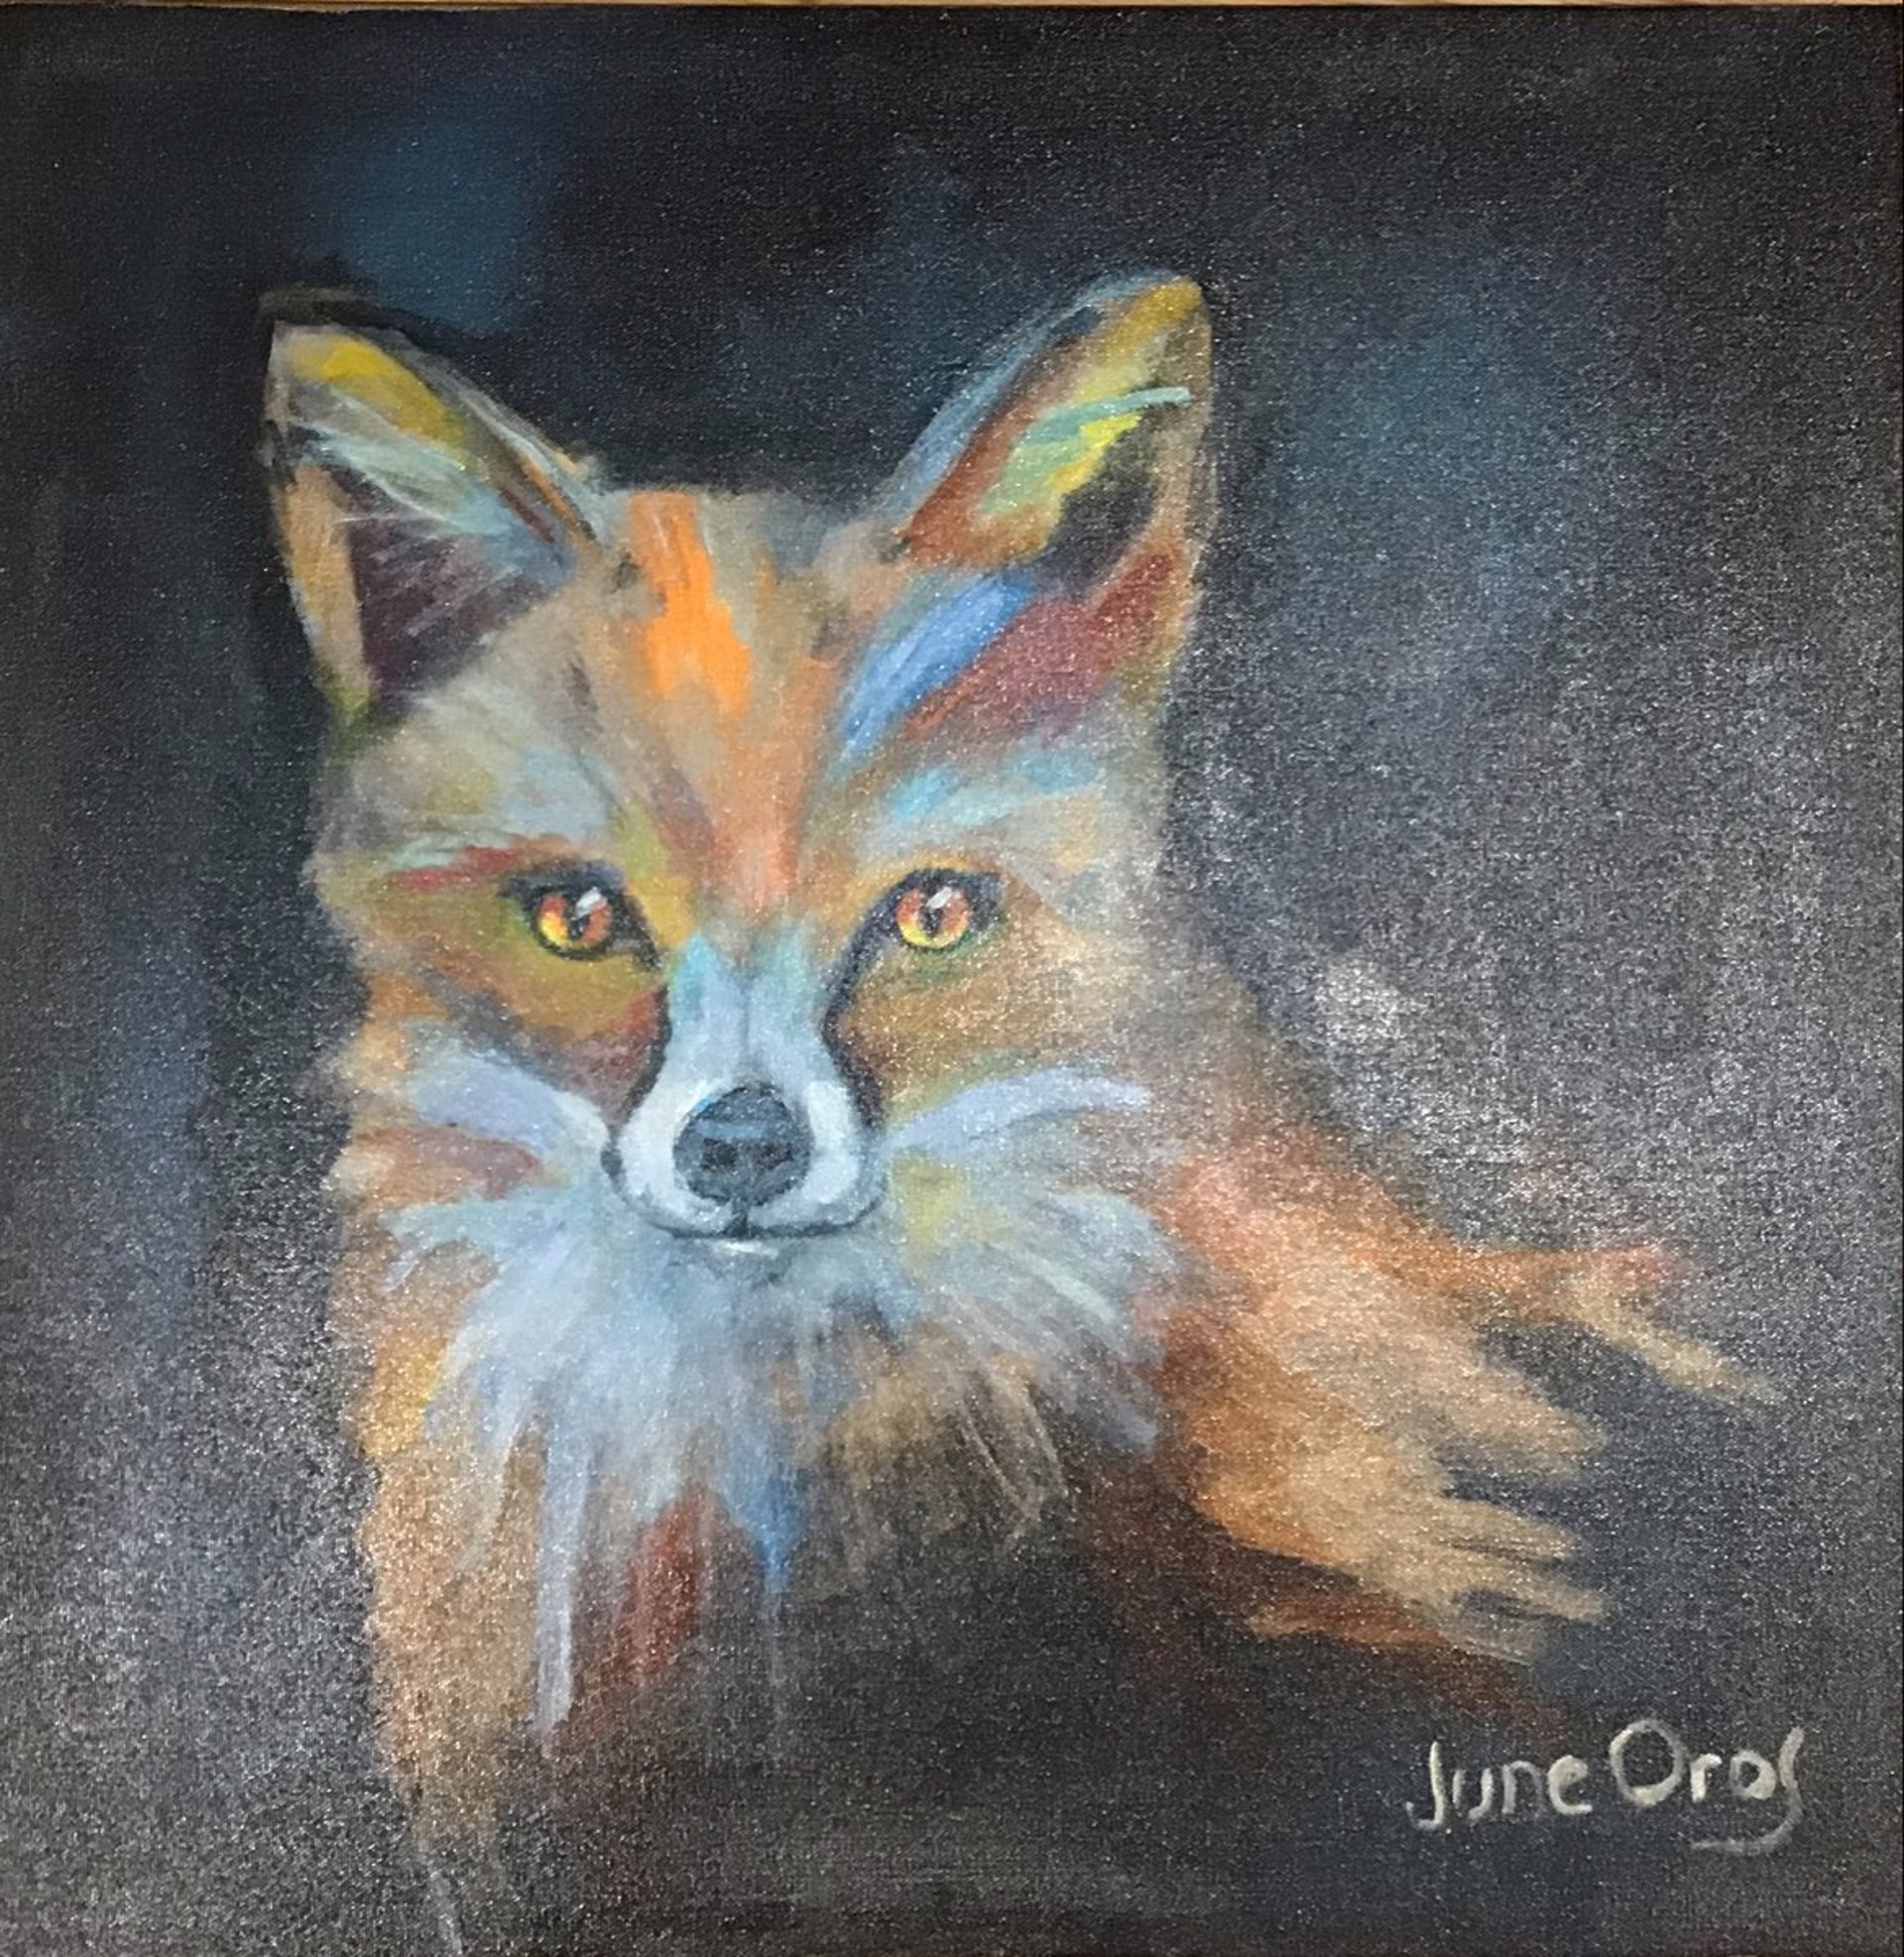 Curious Fox by June Oros